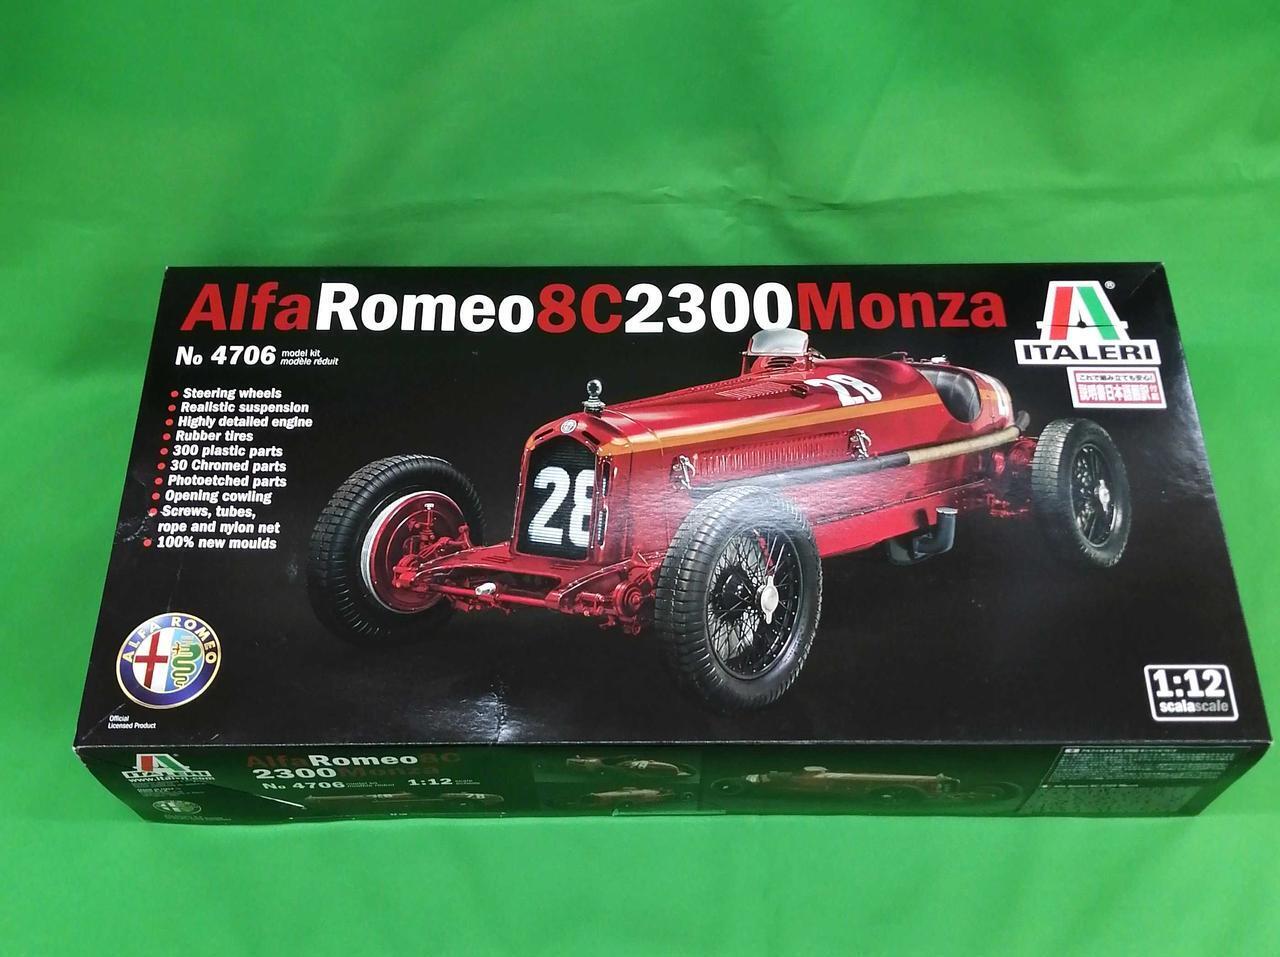 Italeri Alfaromeo8C 2300Monza 1 12 Scale Car _1637